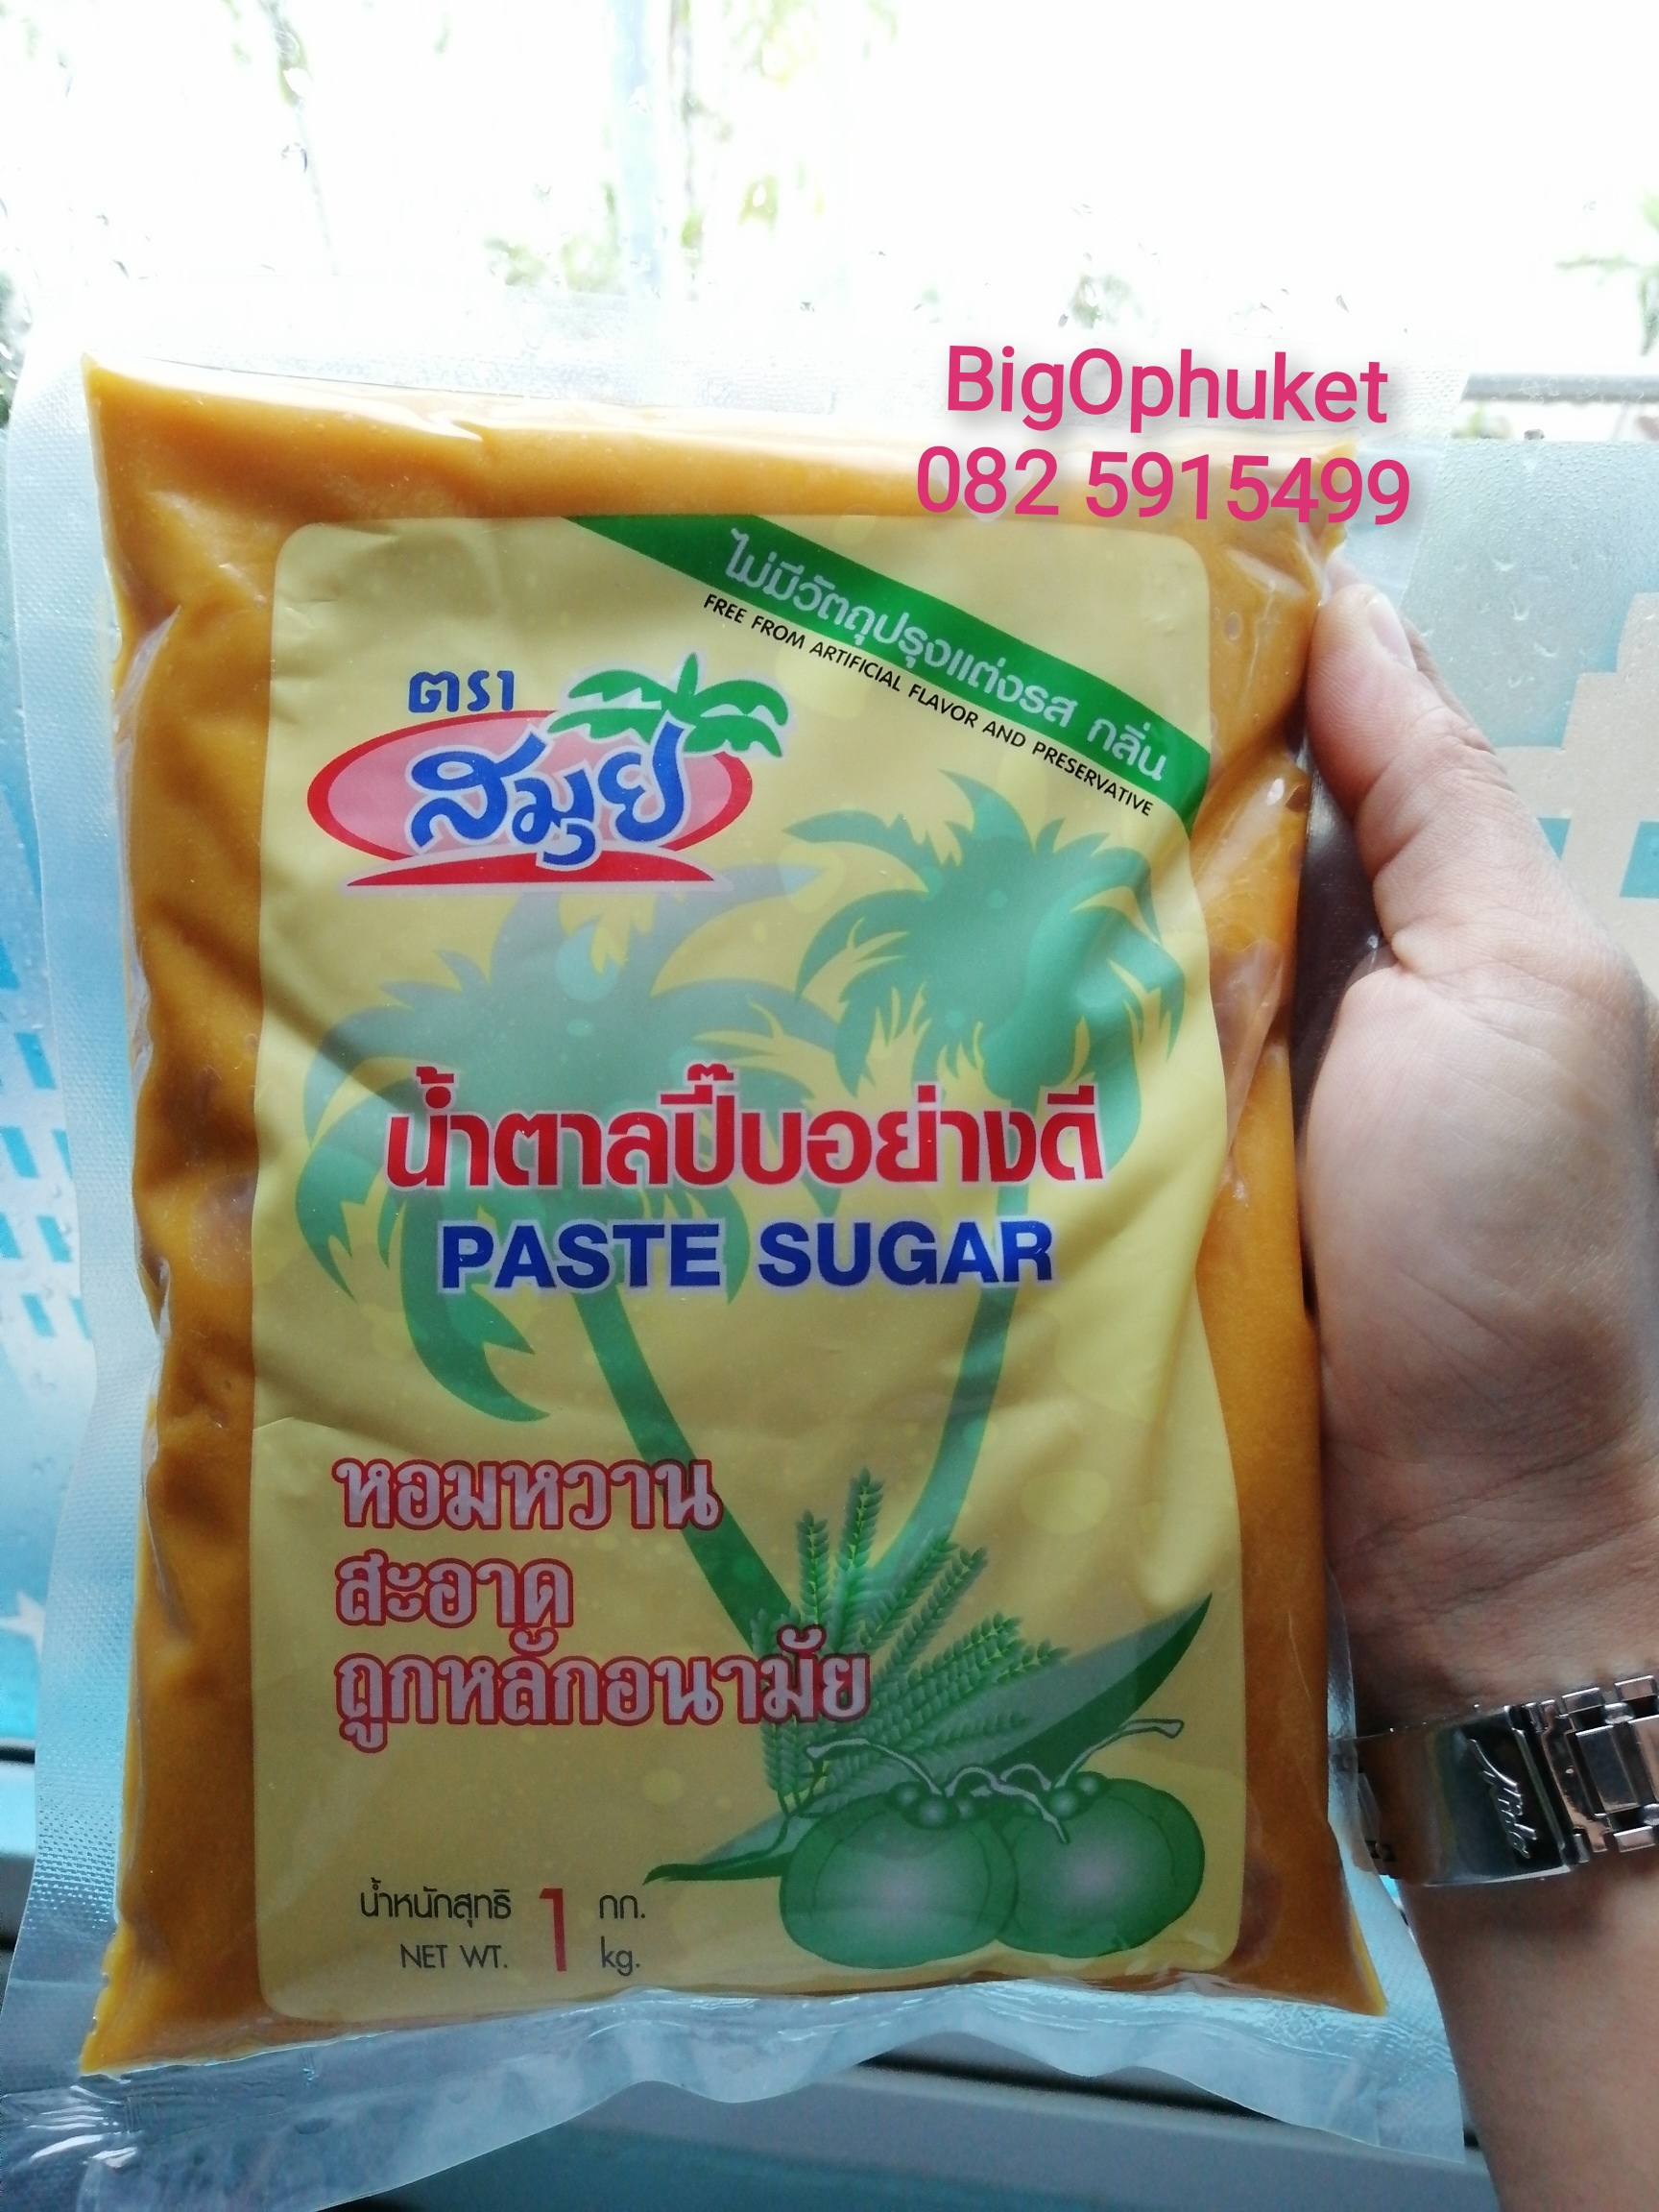 (1 Kg.) น้ำตาลปี๊บ ตราสมุย : Samui Paste Sugar #Free from artificial flavor and preservative #ไม่มีวัตถุปรุงแต่งรสและกลิ่น